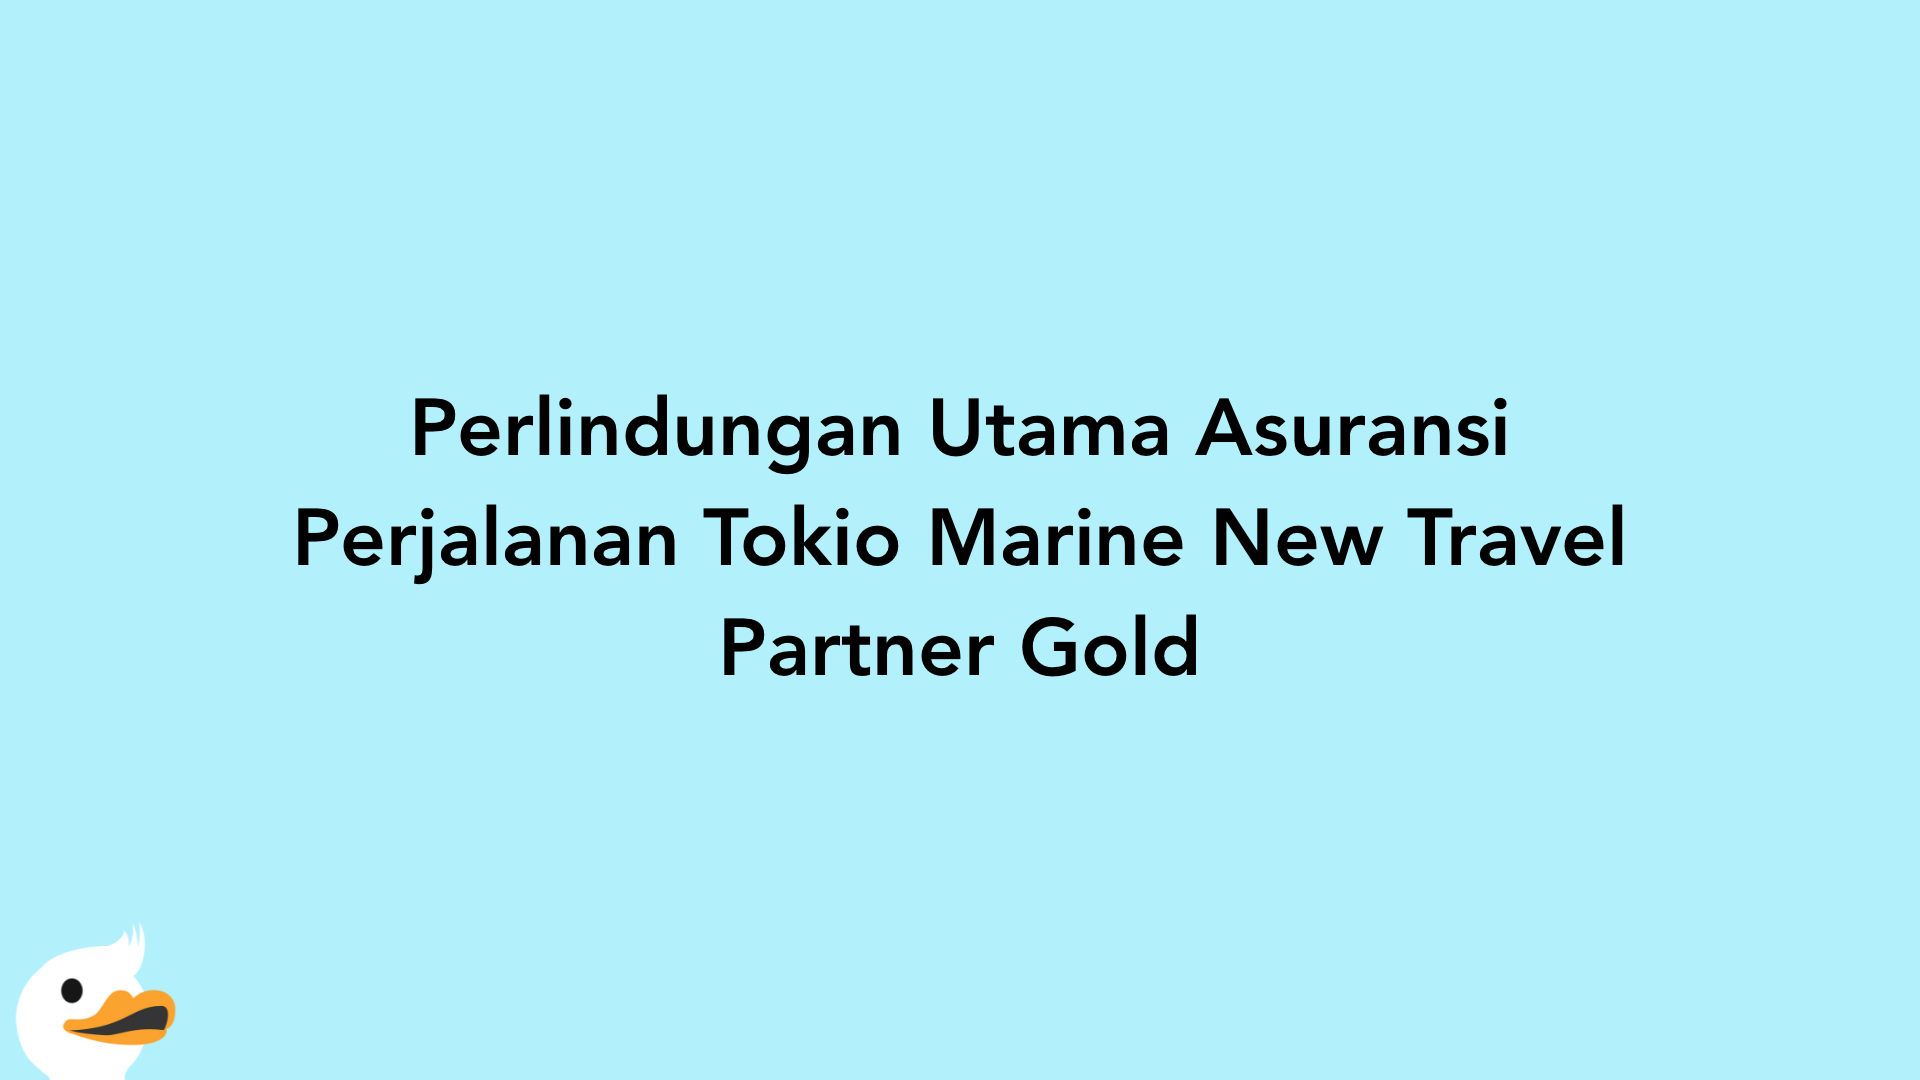 Perlindungan Utama Asuransi Perjalanan Tokio Marine New Travel Partner Gold